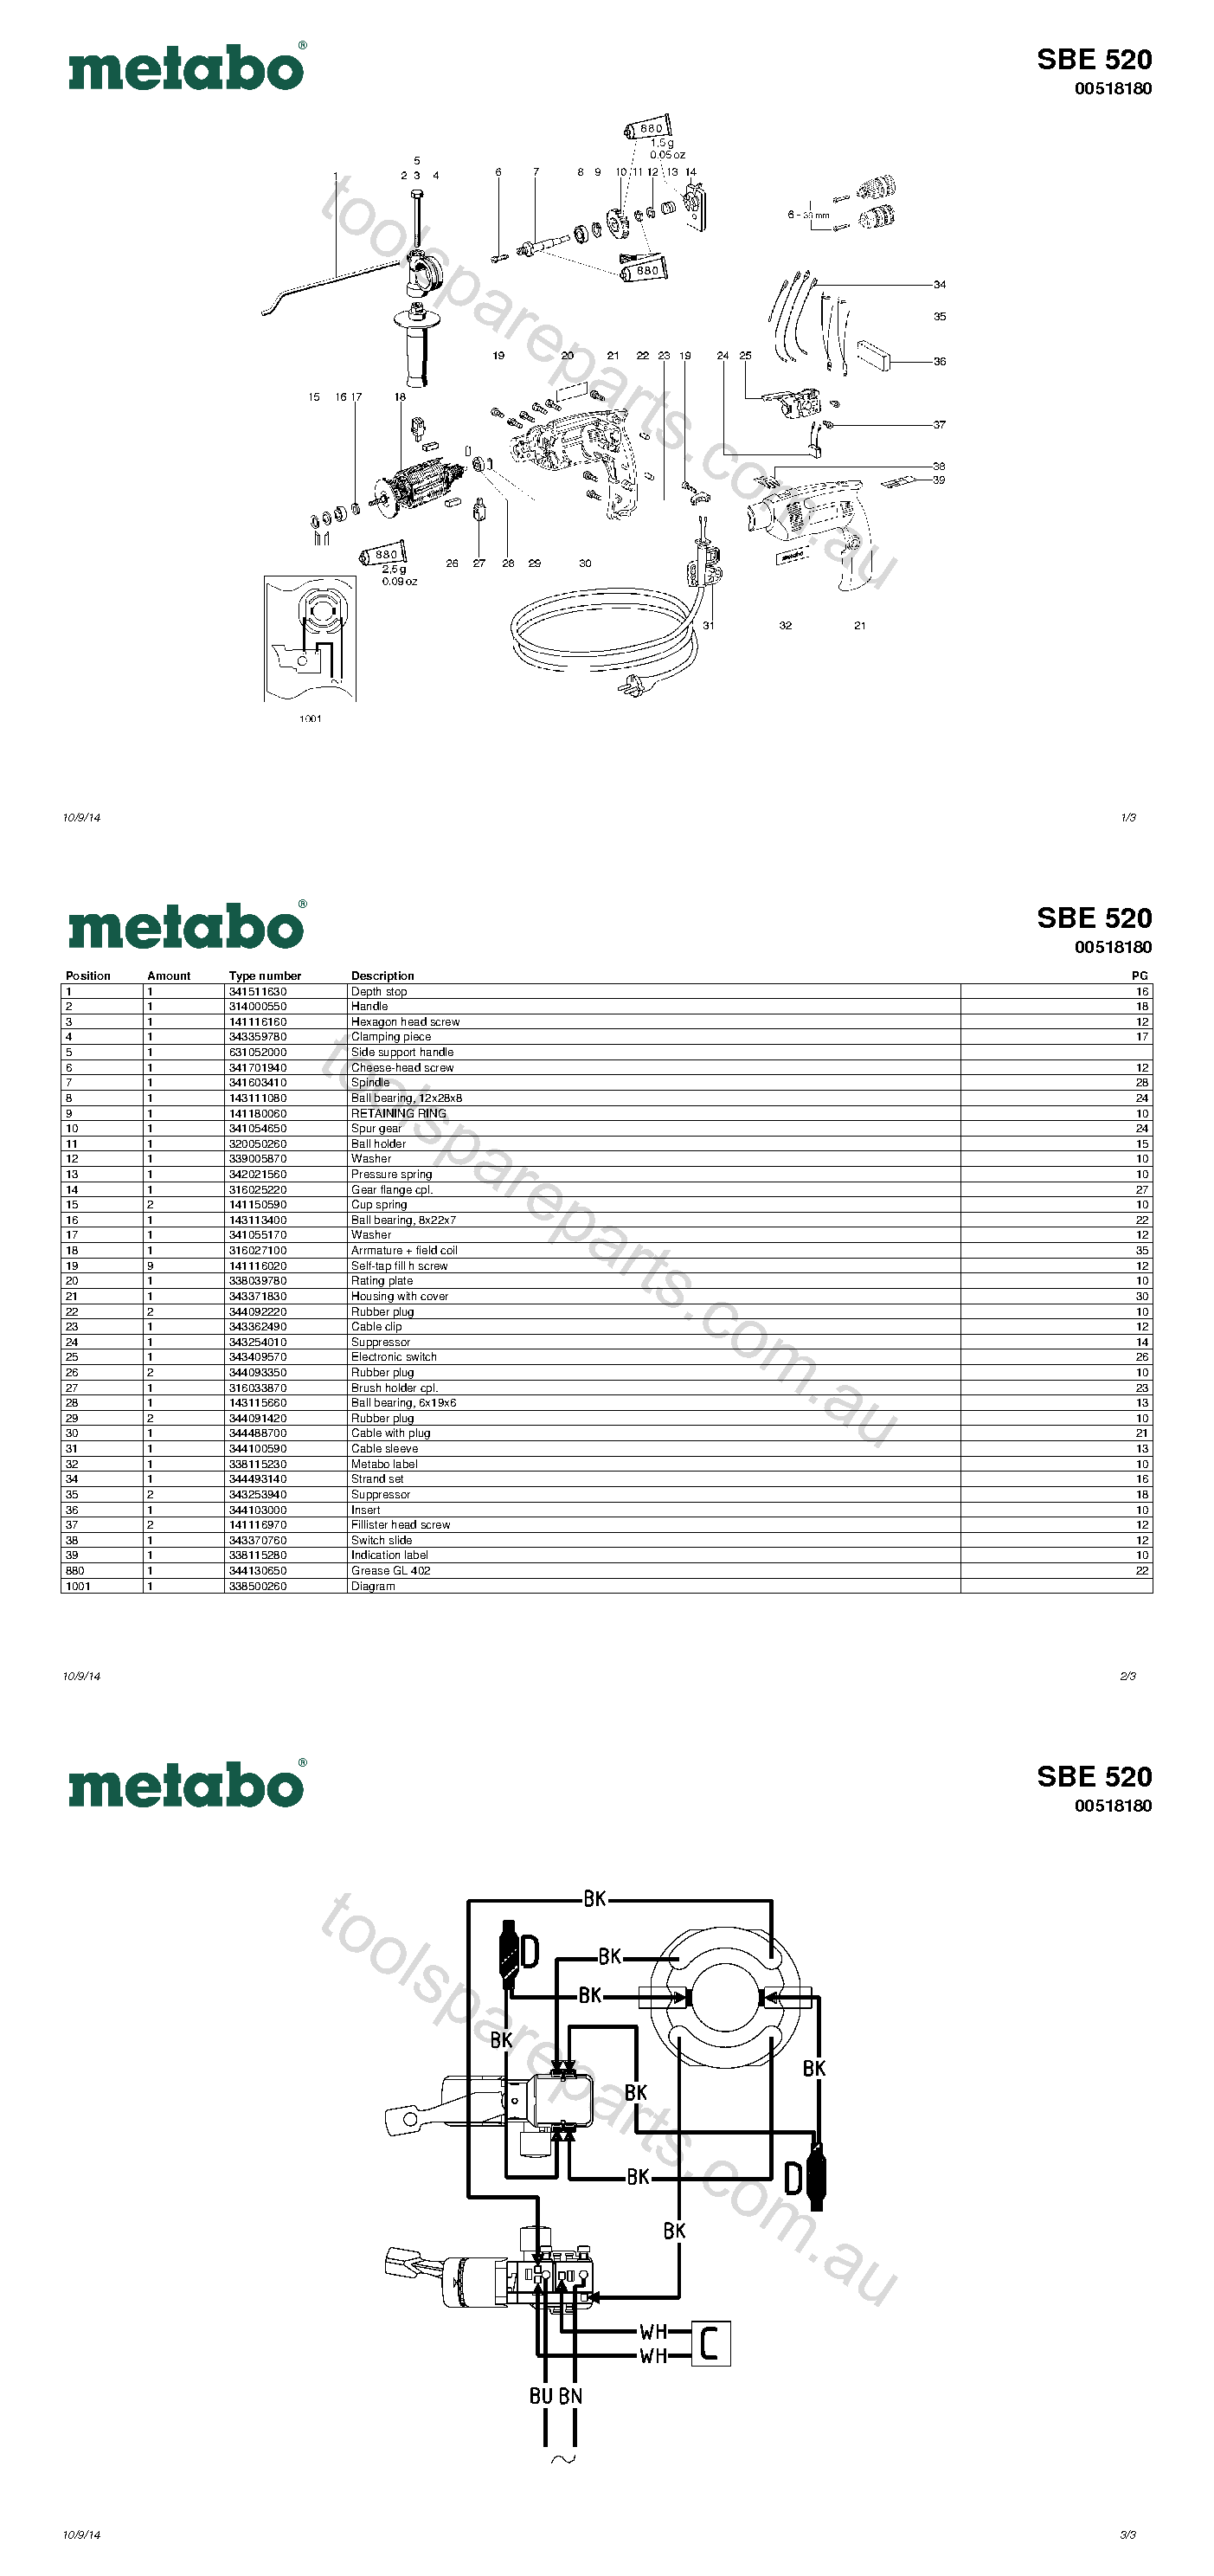 Metabo SBE 520 00518180  Diagram 1